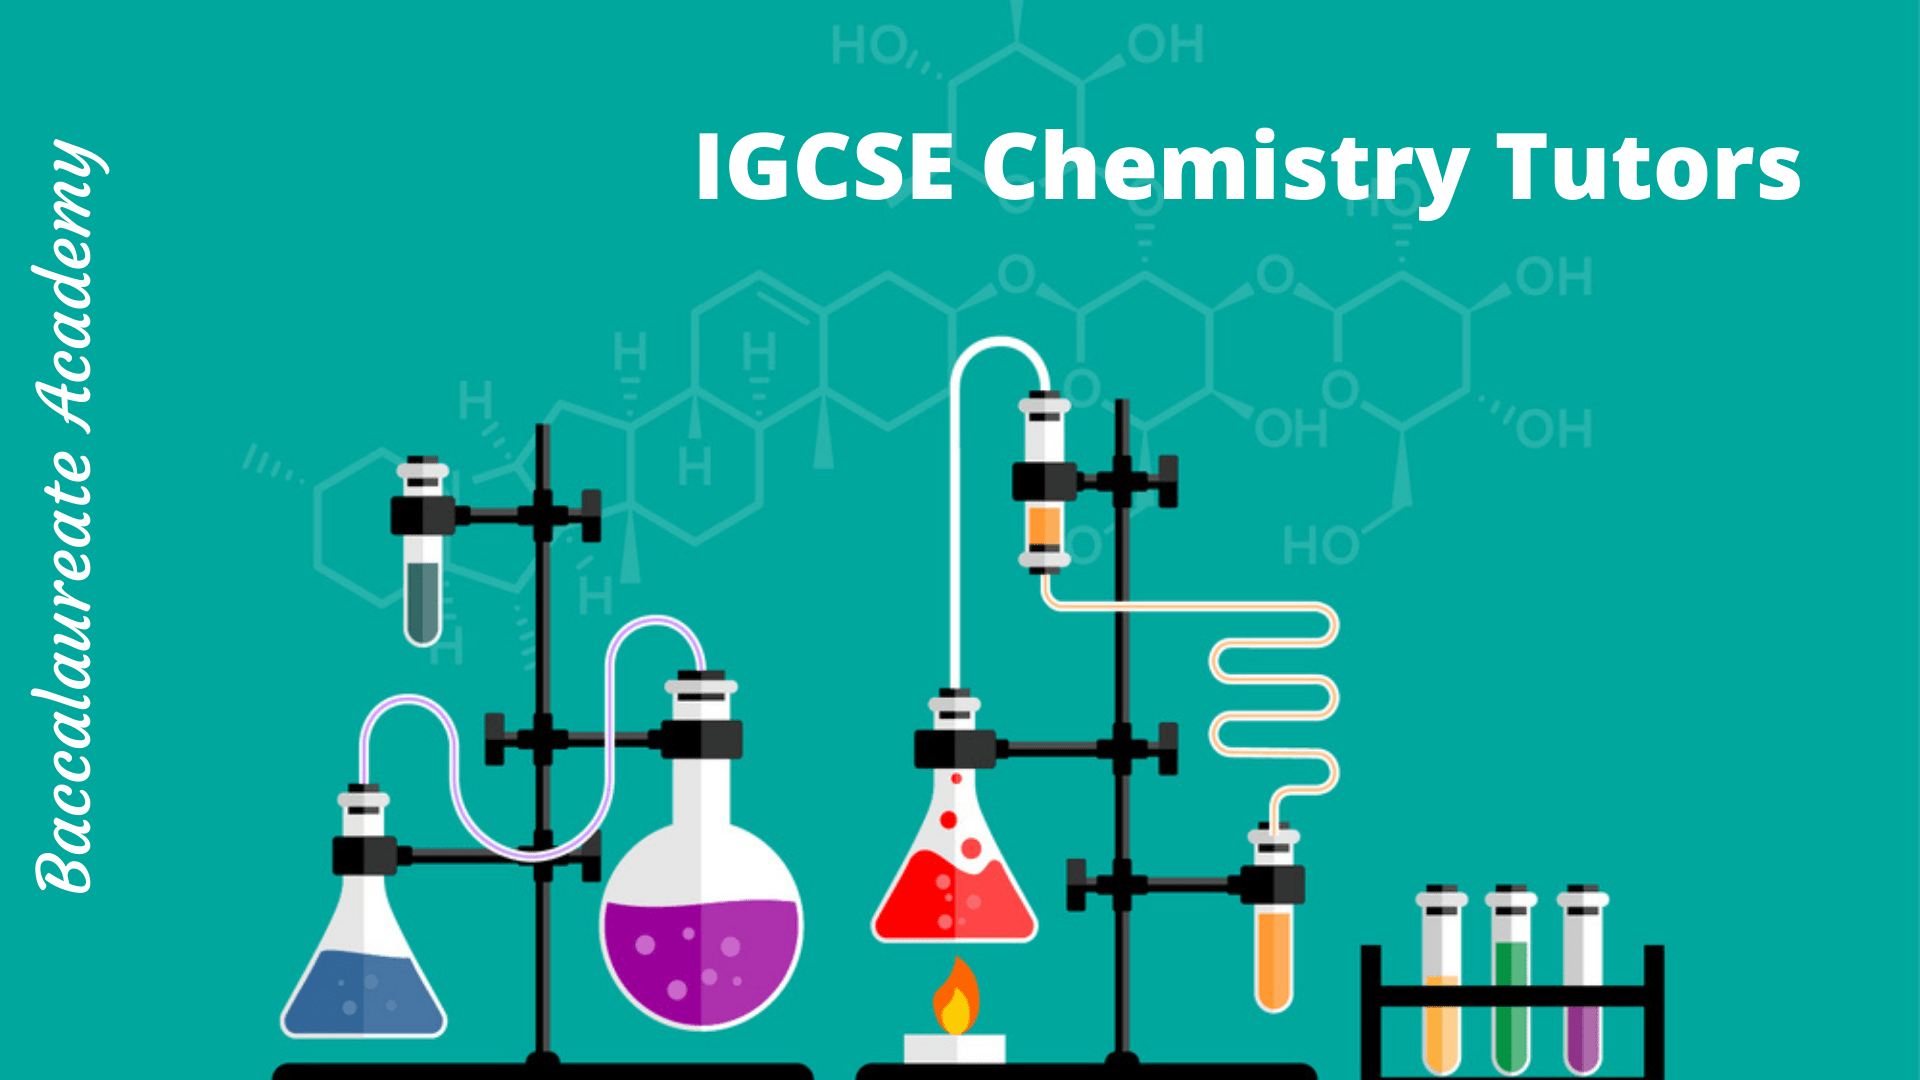 IGCSE Chemistry Tutors | Online IGCSE Chemistry Tutors - Baccalaureate Academy